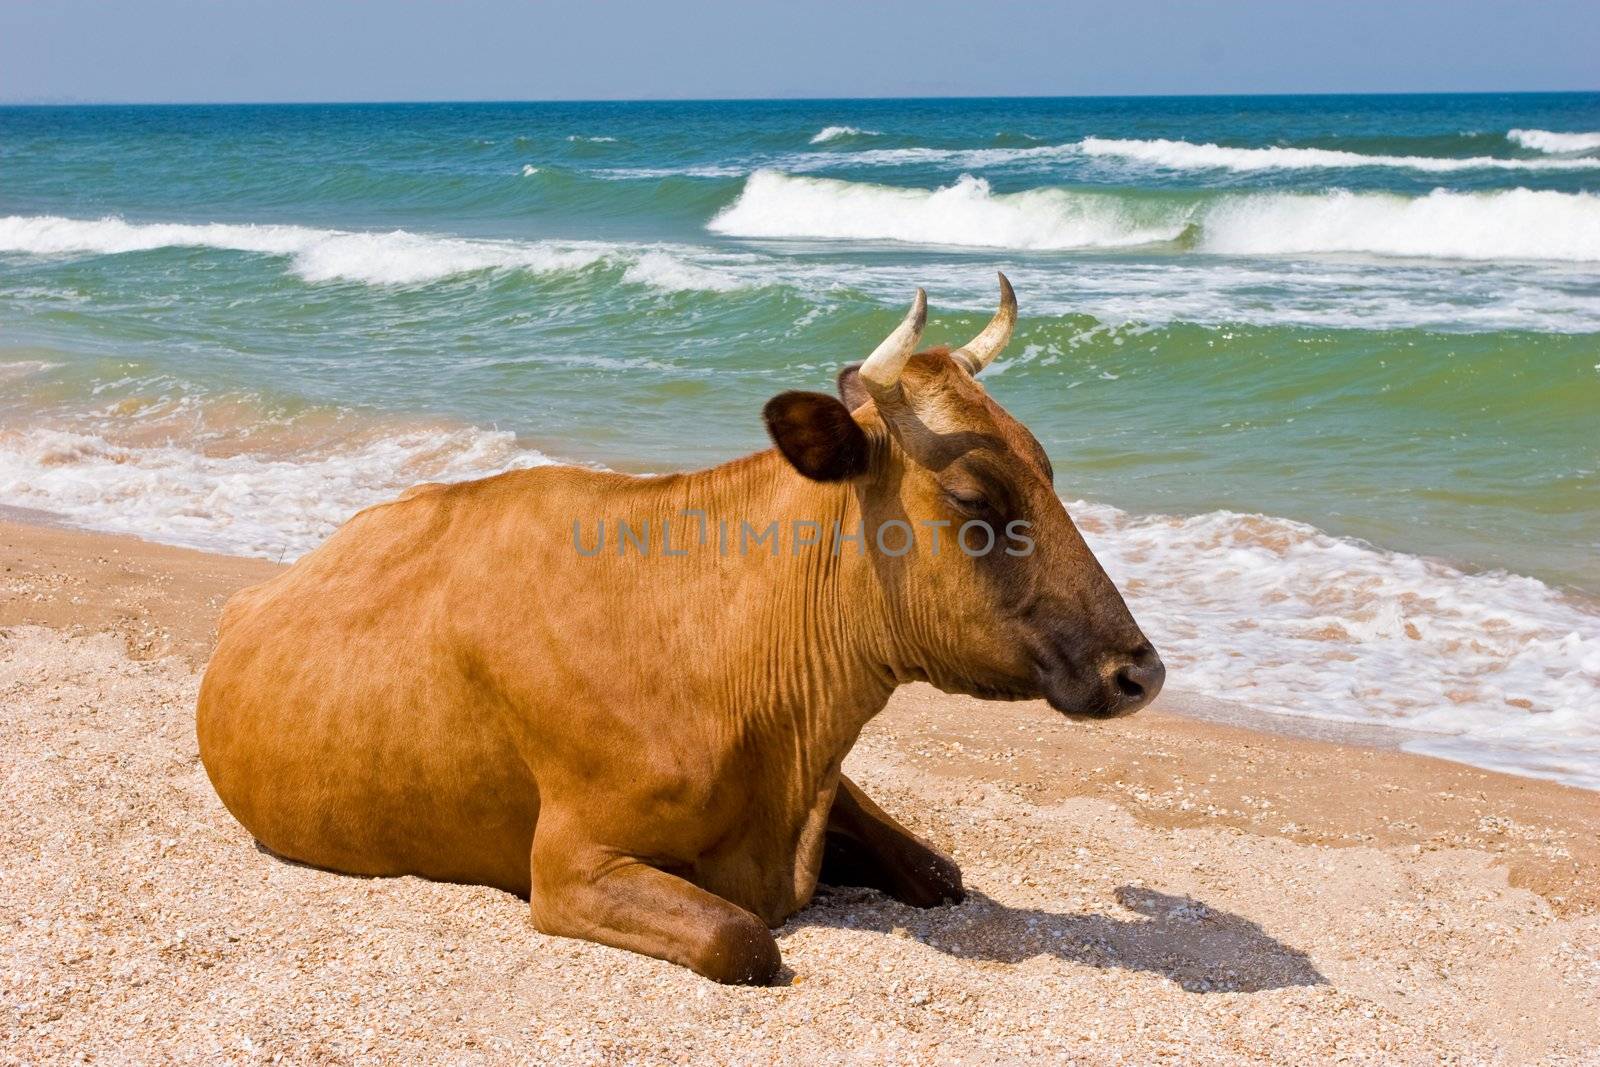 leisure series: cow take a sunbathe on the sea beach